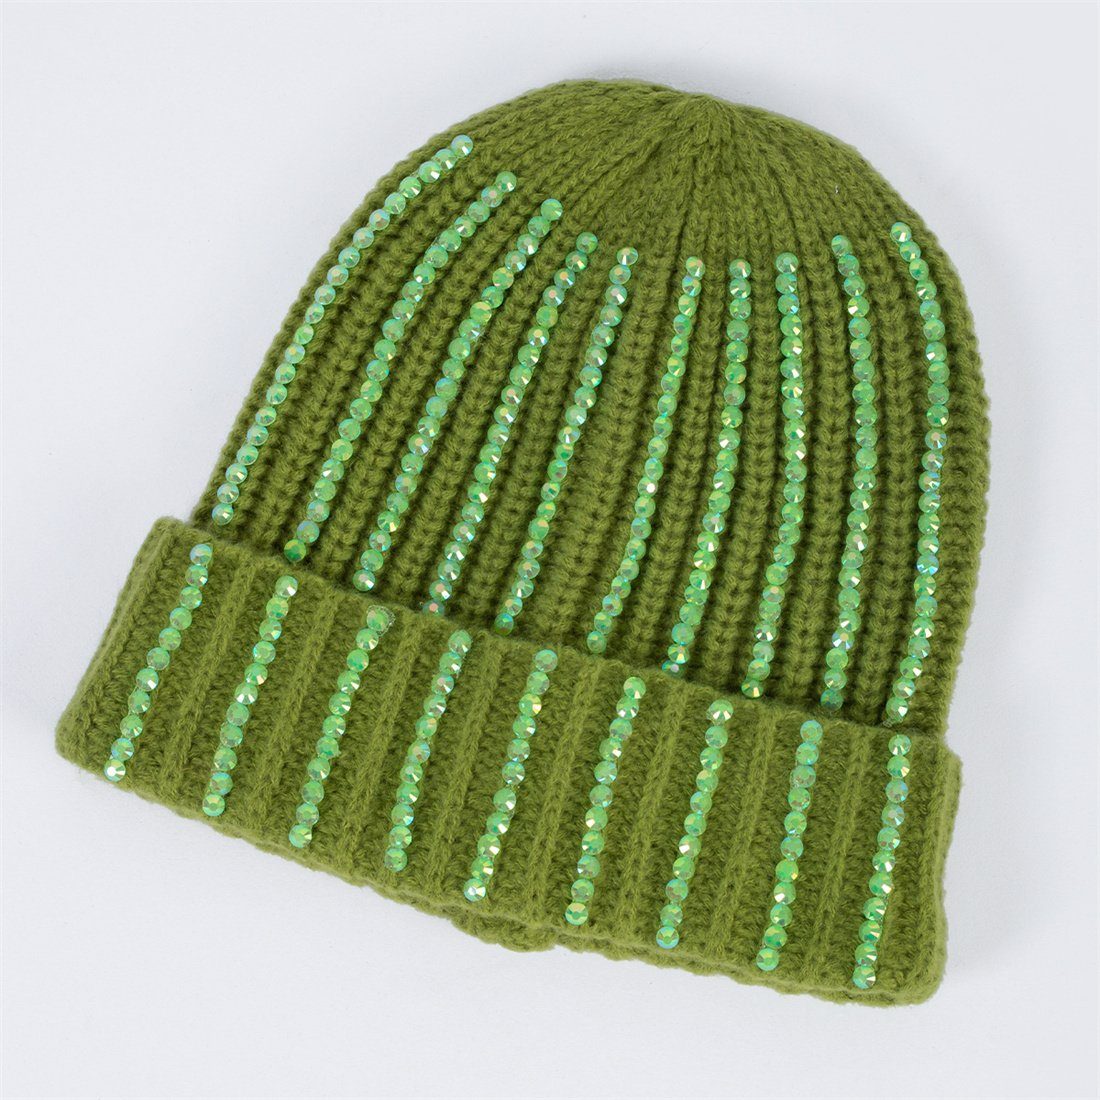 Outdoor-Mode Strickmütze Strickmütze, Winter DÖRÖY Wollmütze verdickt grün Damen warme warme